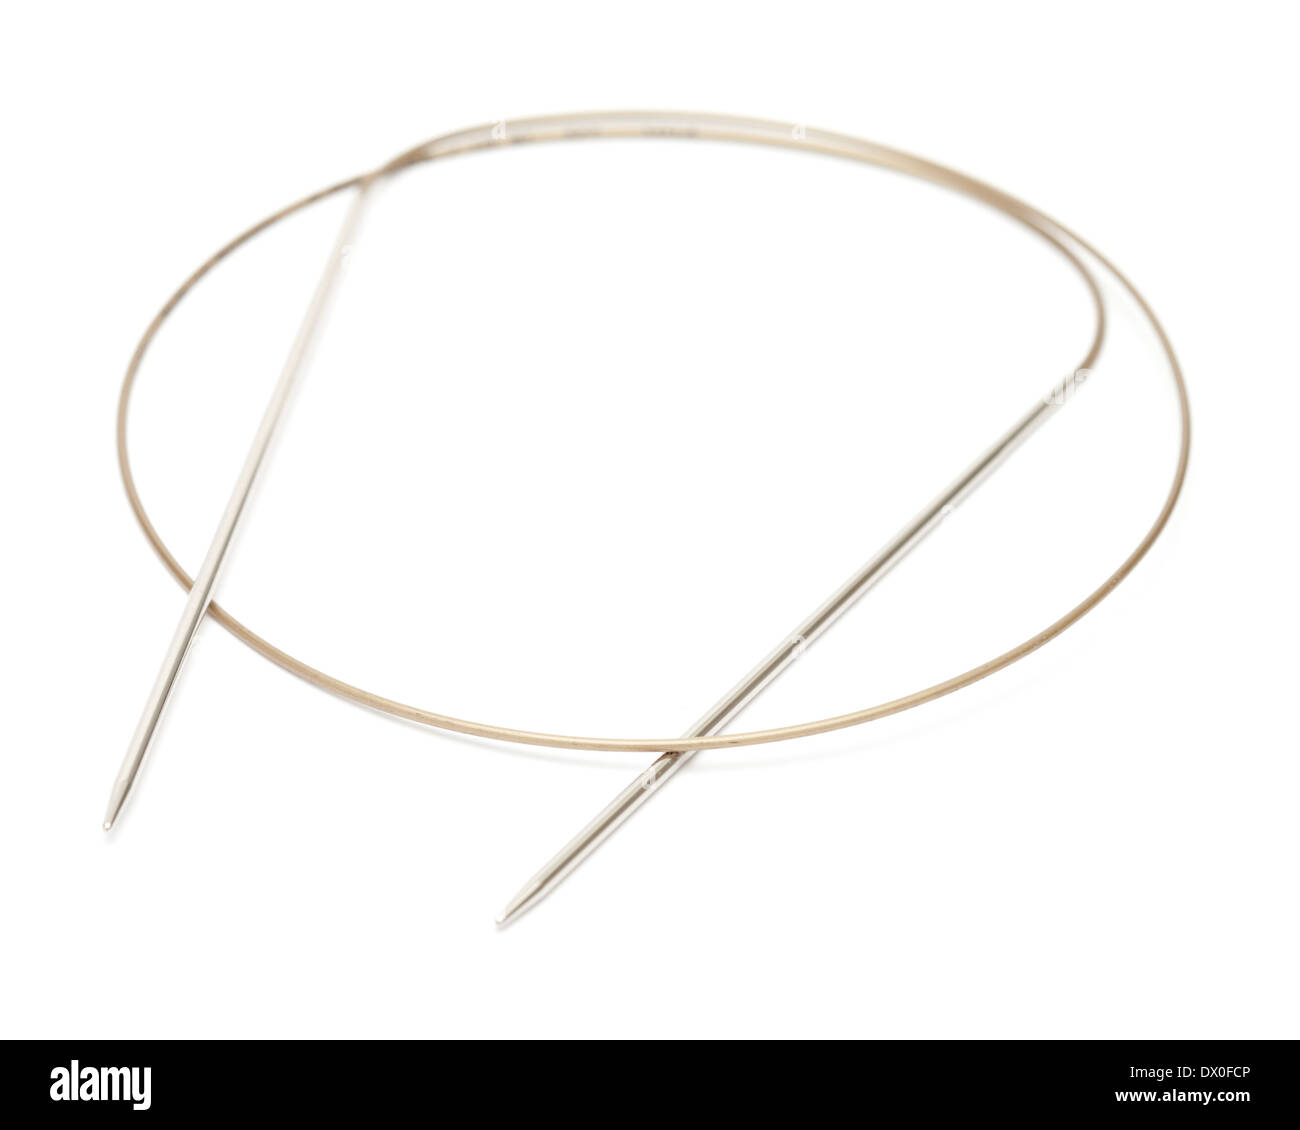 circular knitting needles isolated on white Stock Photo